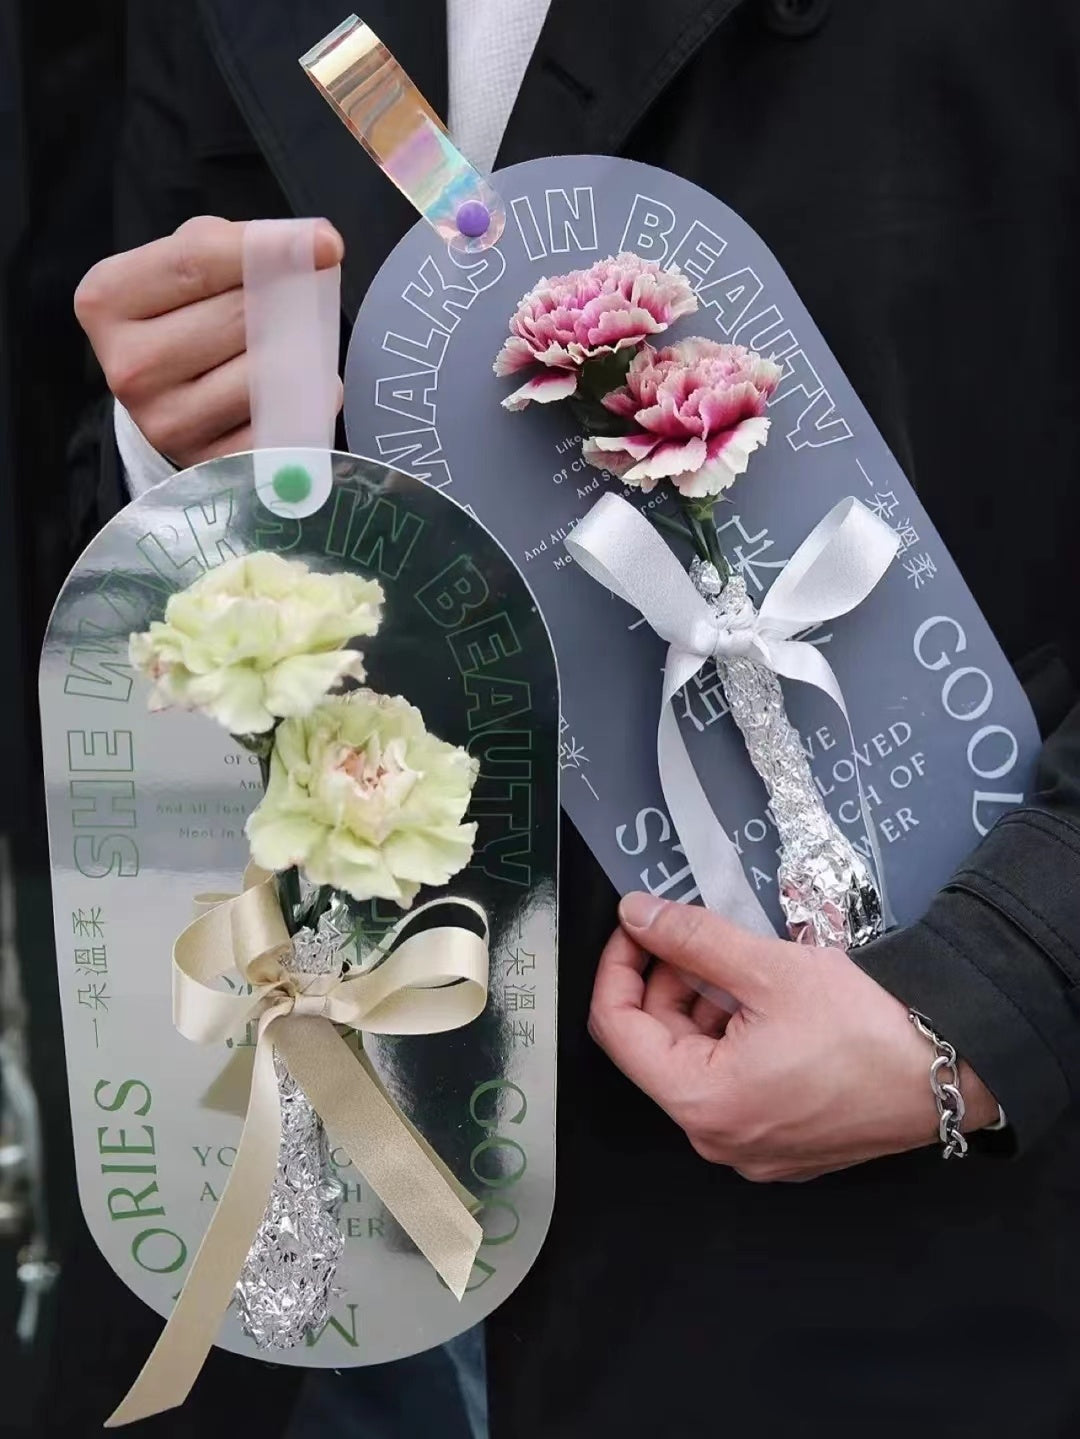 5pcs Lovely Heart Single Rose Sleeves Paper Flower Bouquet Bags